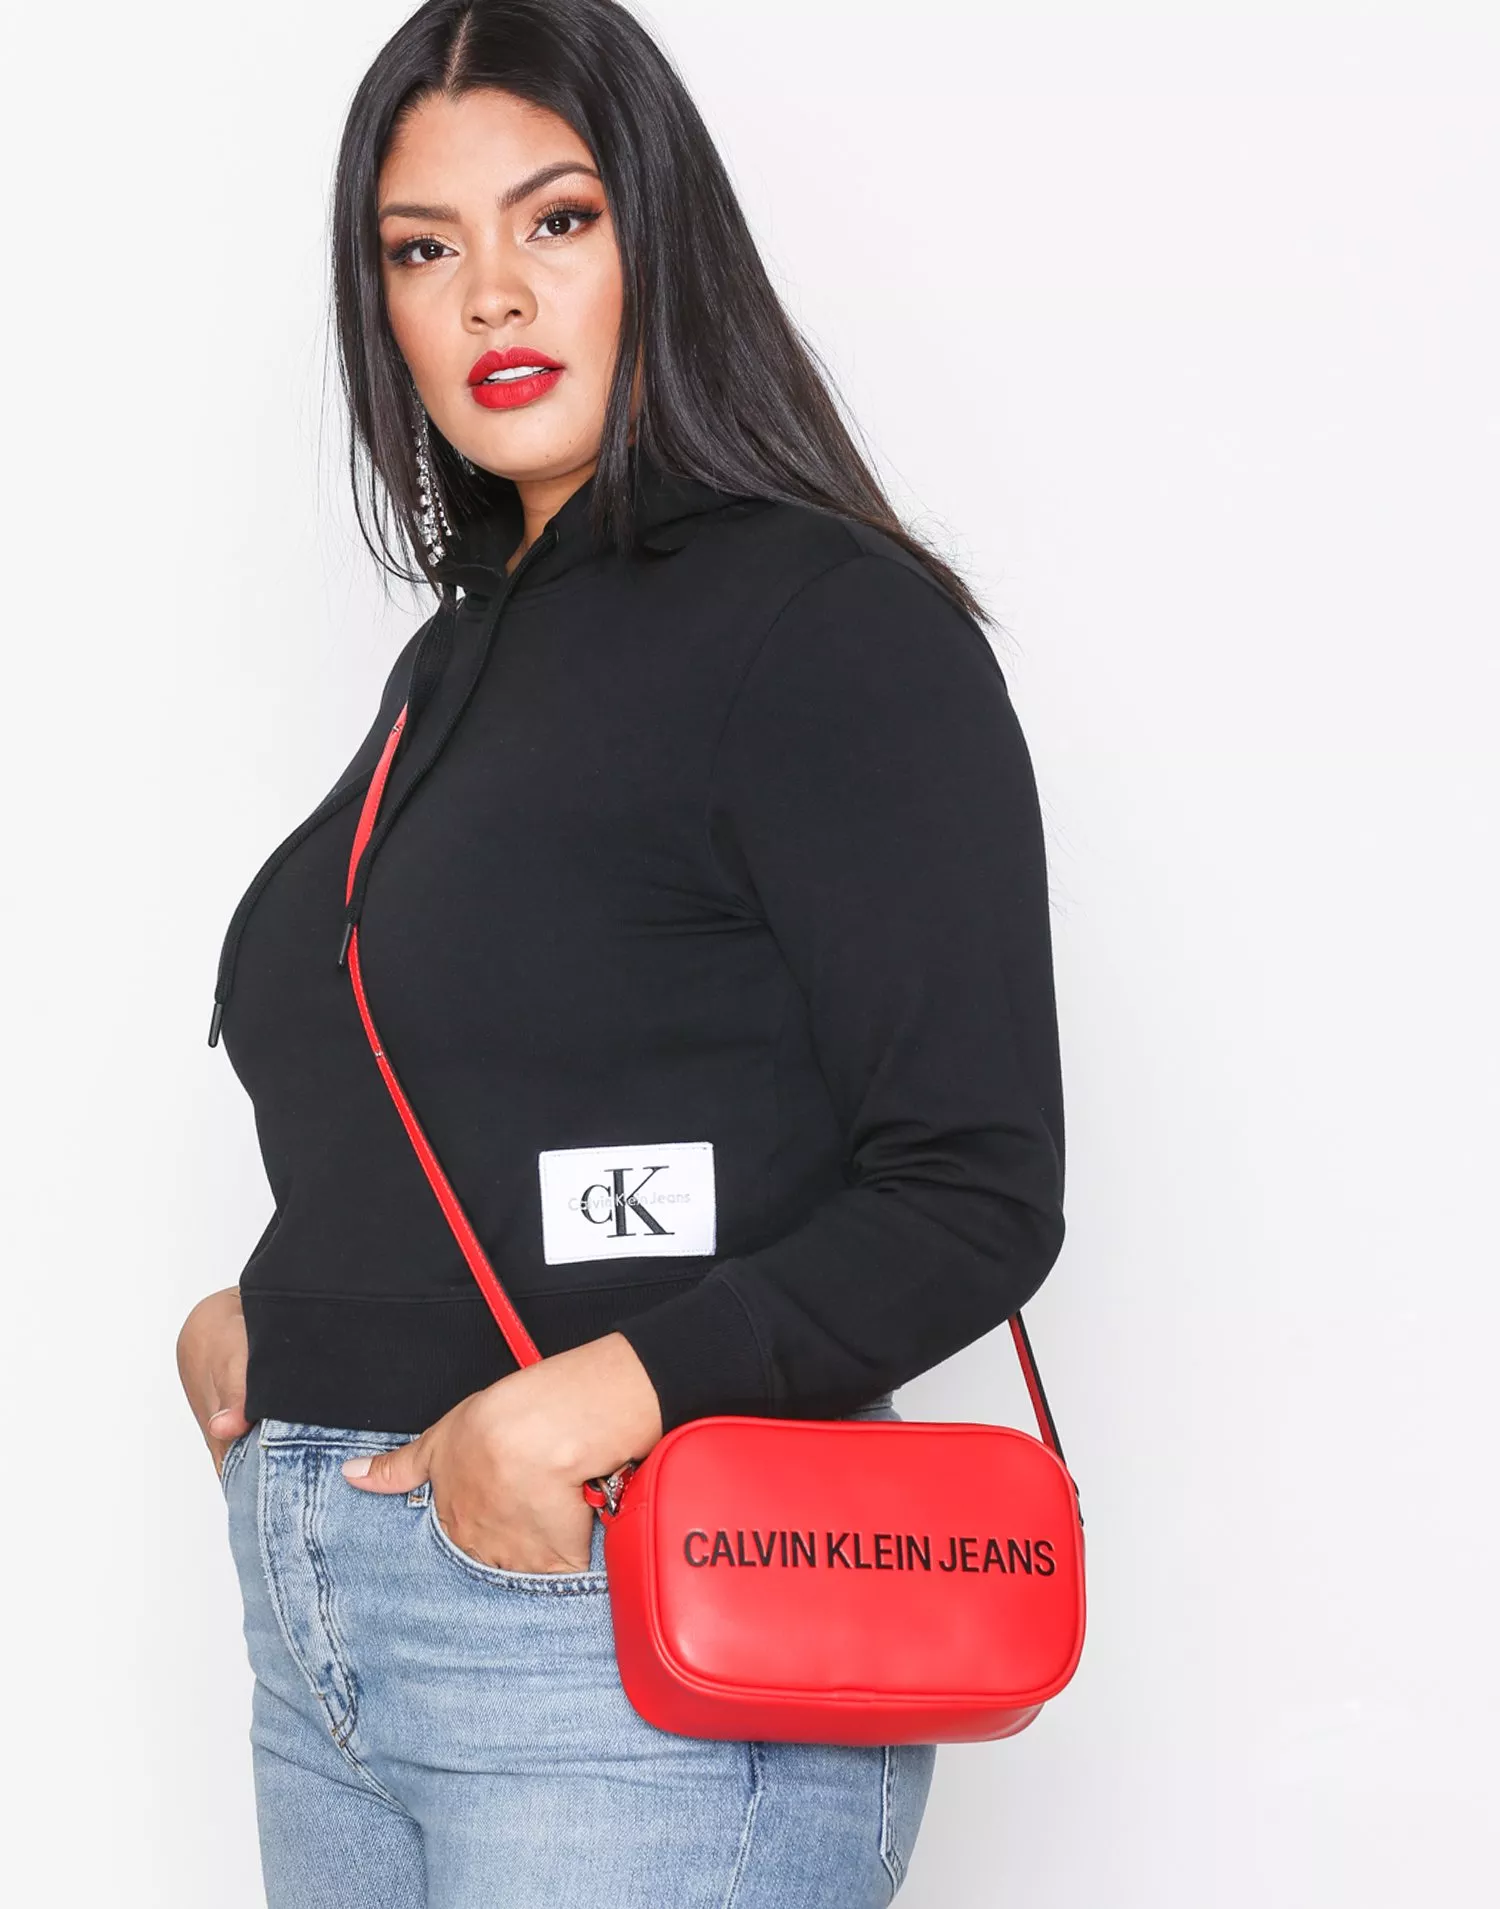 Klein Sculpted Bag Camera Scarlett Jeans Calvin Buy -